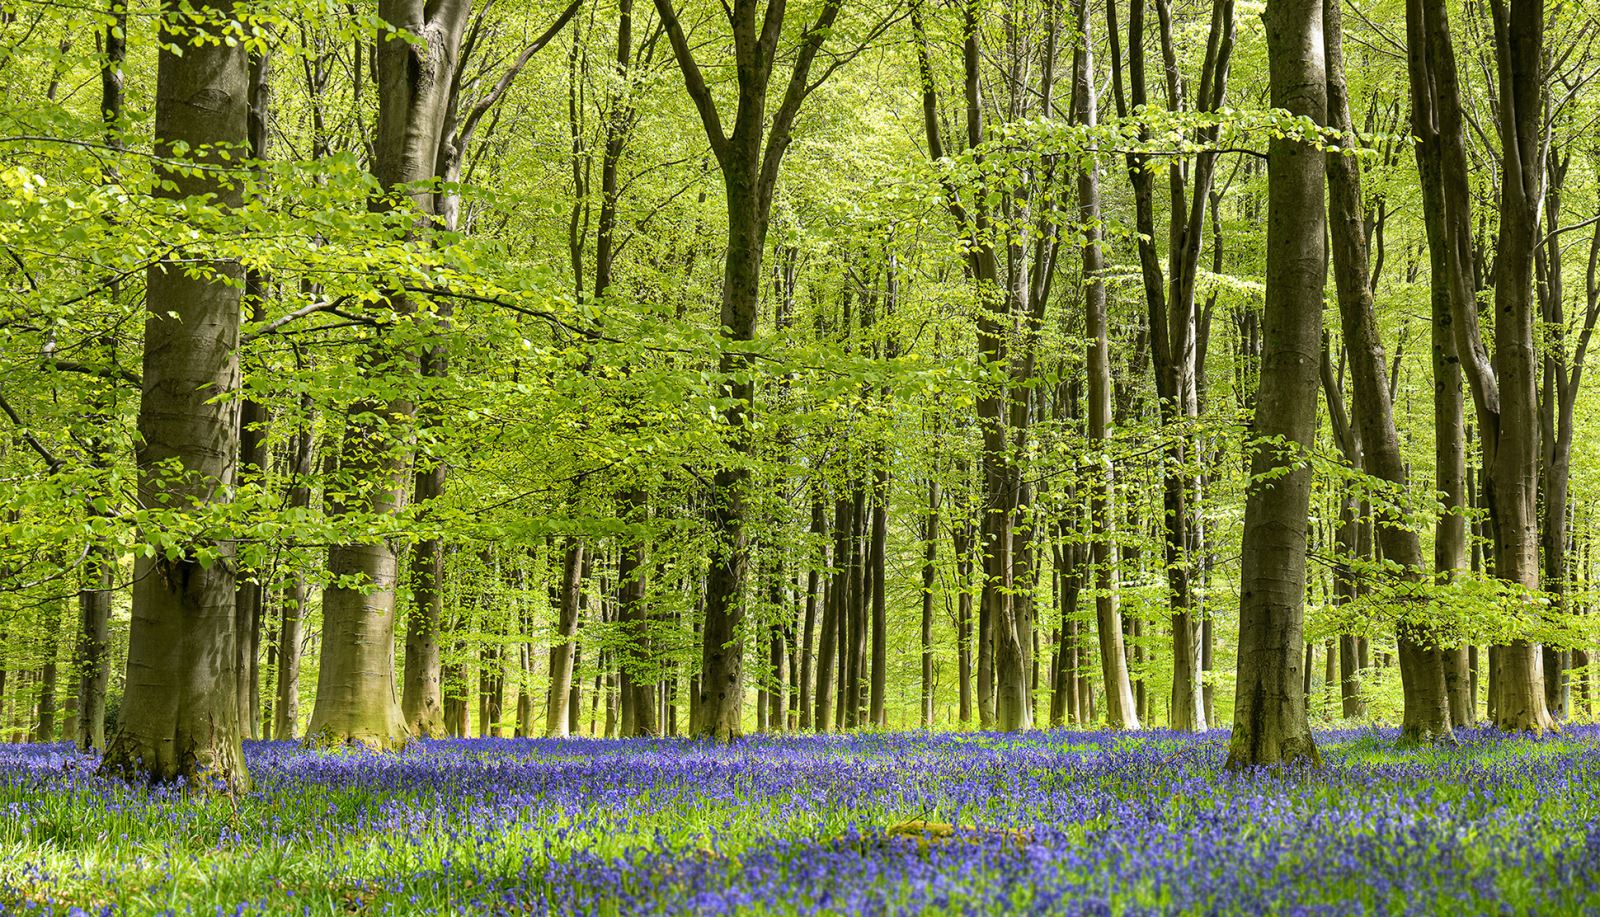 Bluebell woods in Springtime